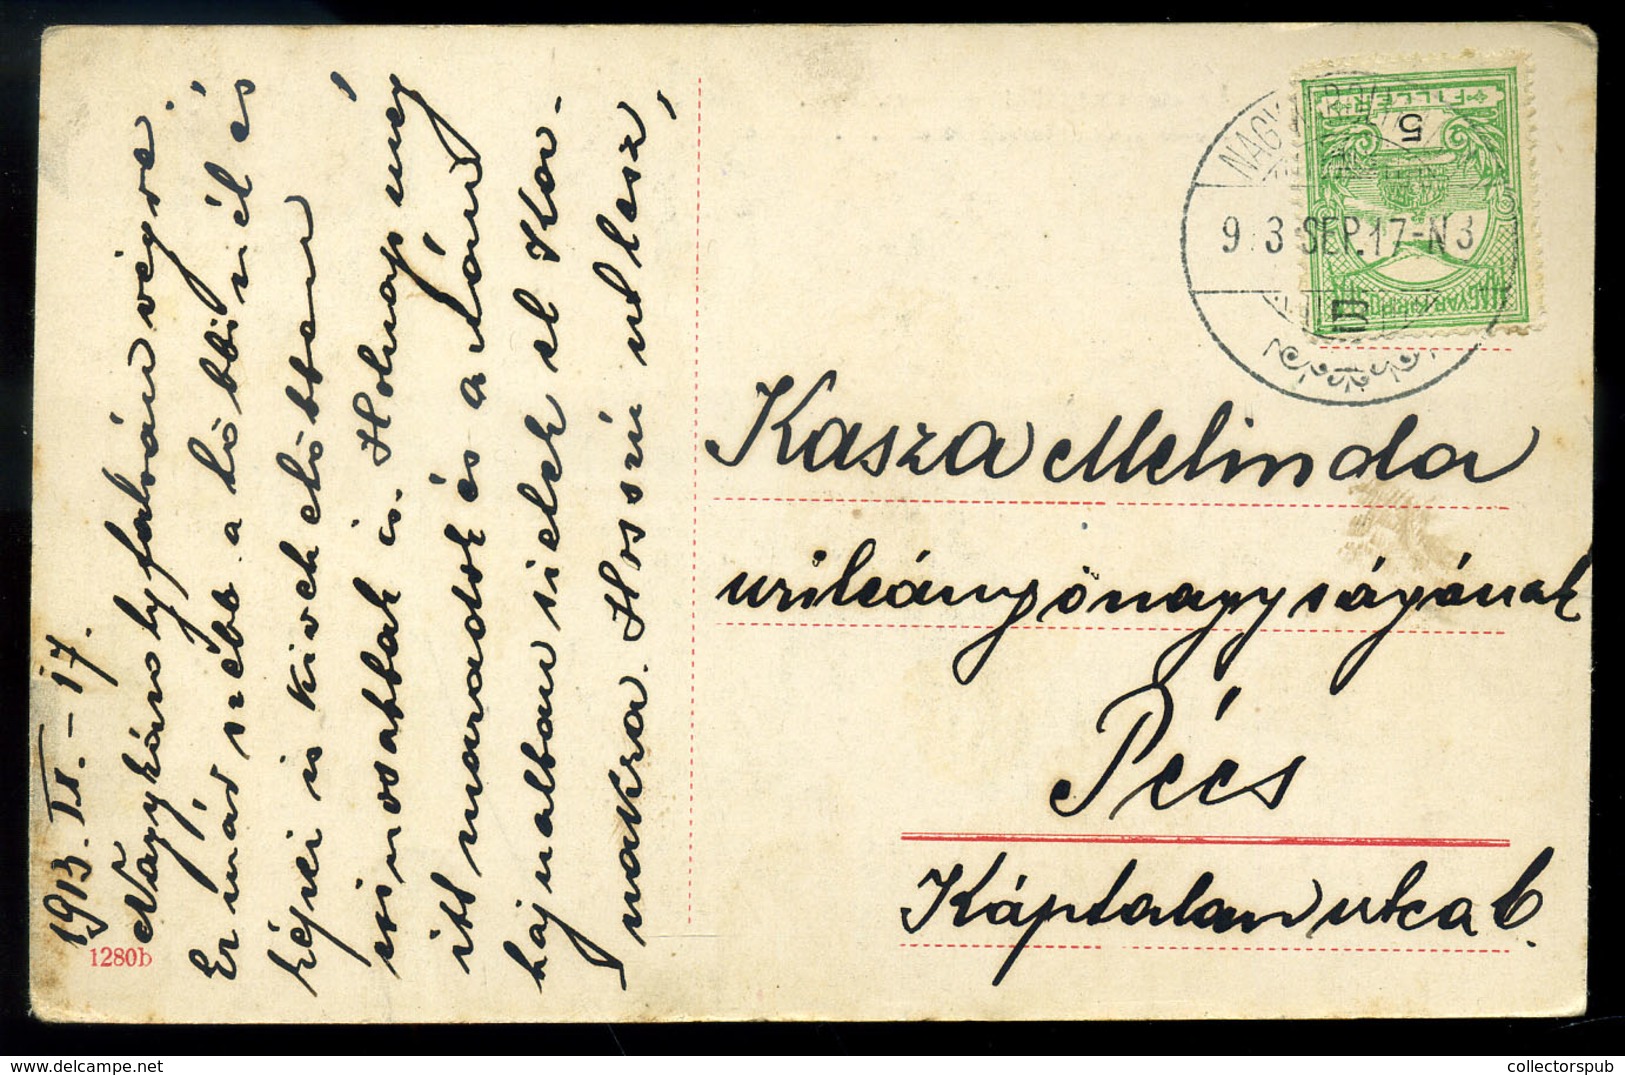 NAGYKÁROLYFALVA / Banatski Karlovac 1913. Régi Képeslap  /   Vintage Pic. P.card - Hongarije